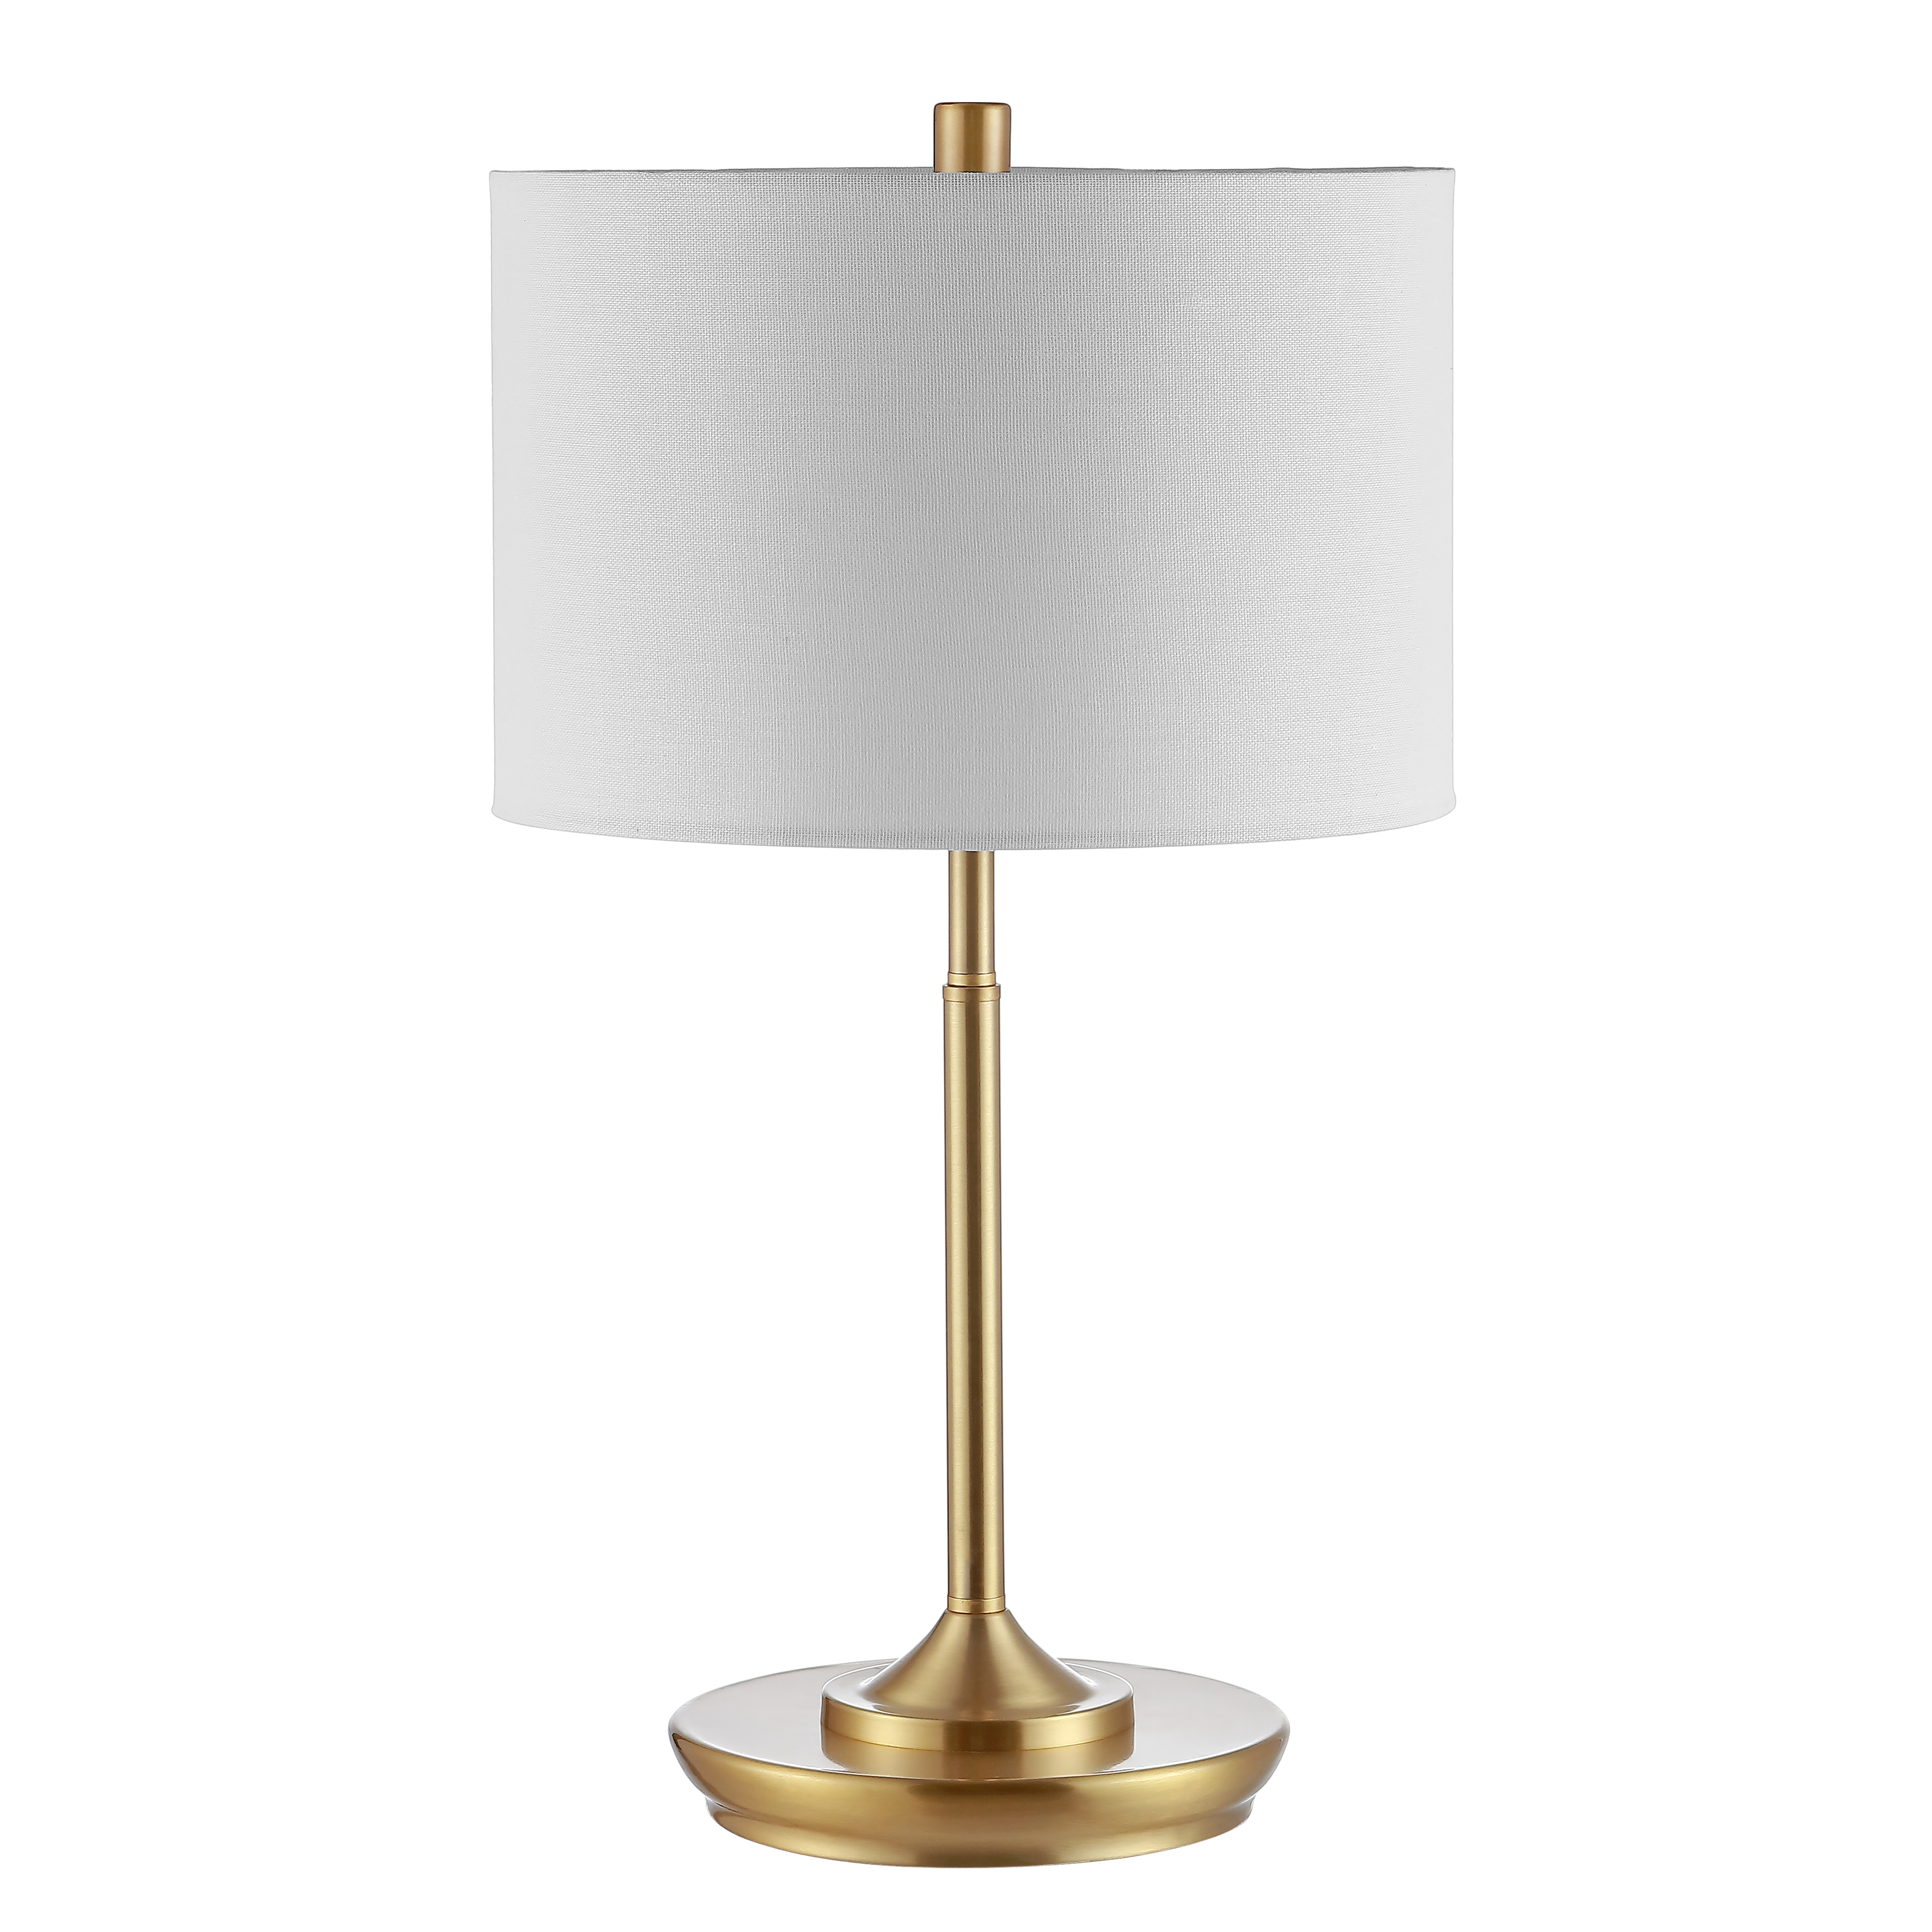 SAFAVIEH Taren Glam Table Lamp, Brass Gold, Set of 2 - image 4 of 7